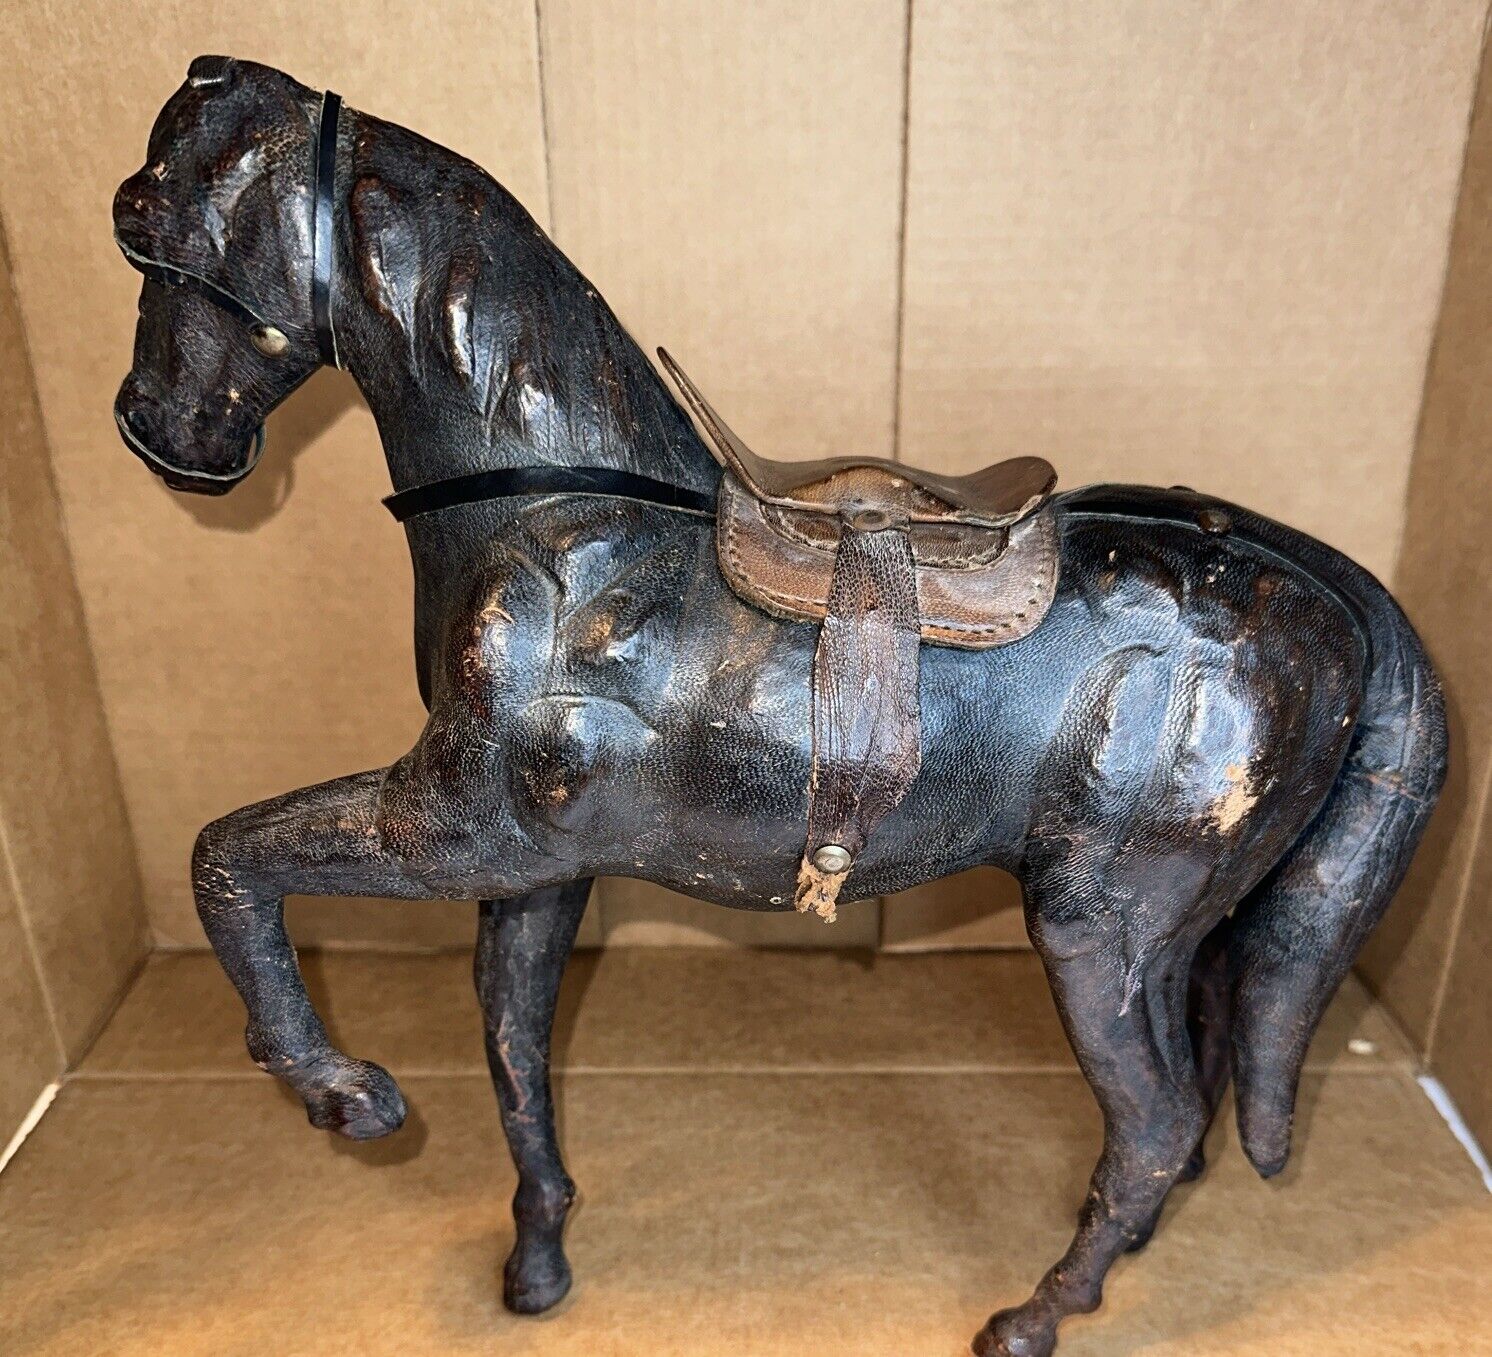 Vintage Leather-Wrapped Horse Figurine with Tack Folk Art Decor - Rare